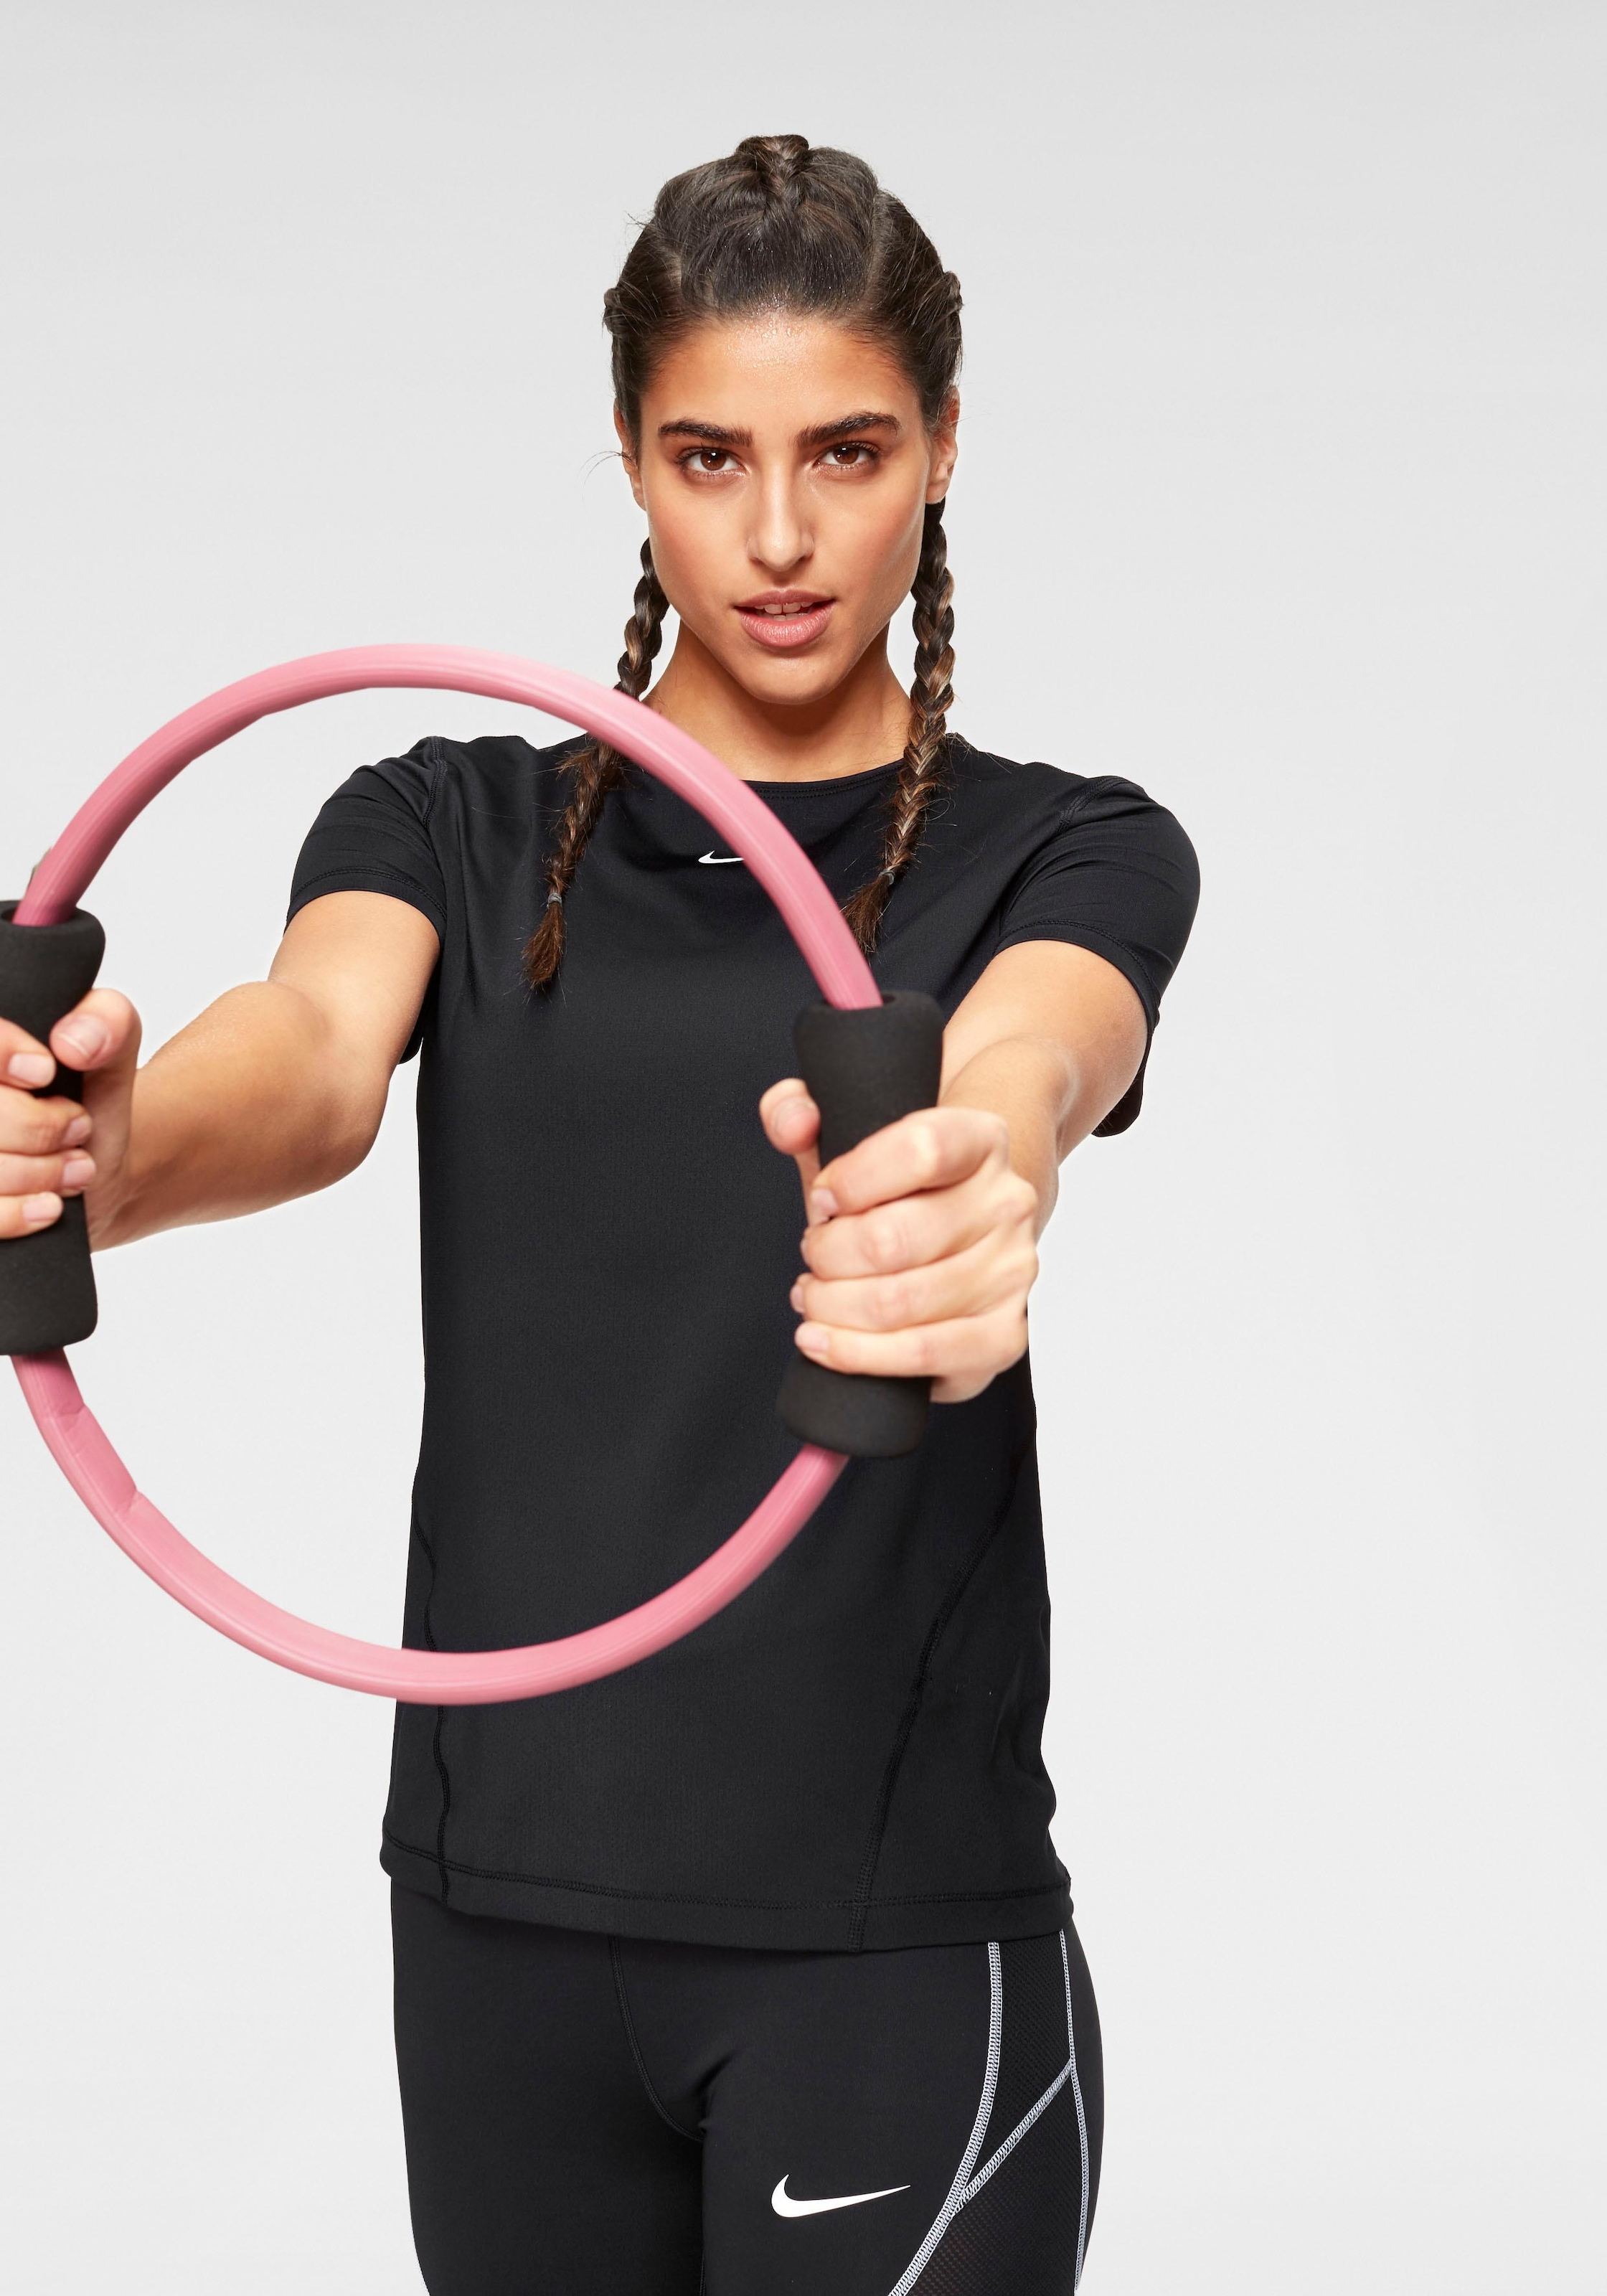 Nike Funktionsshirt »WOMEN NIKE PERFORMANCE TOP SHORTSLEEVE ALL OVER MESH«,  DRI-FIT Technology kaufen | BAUR